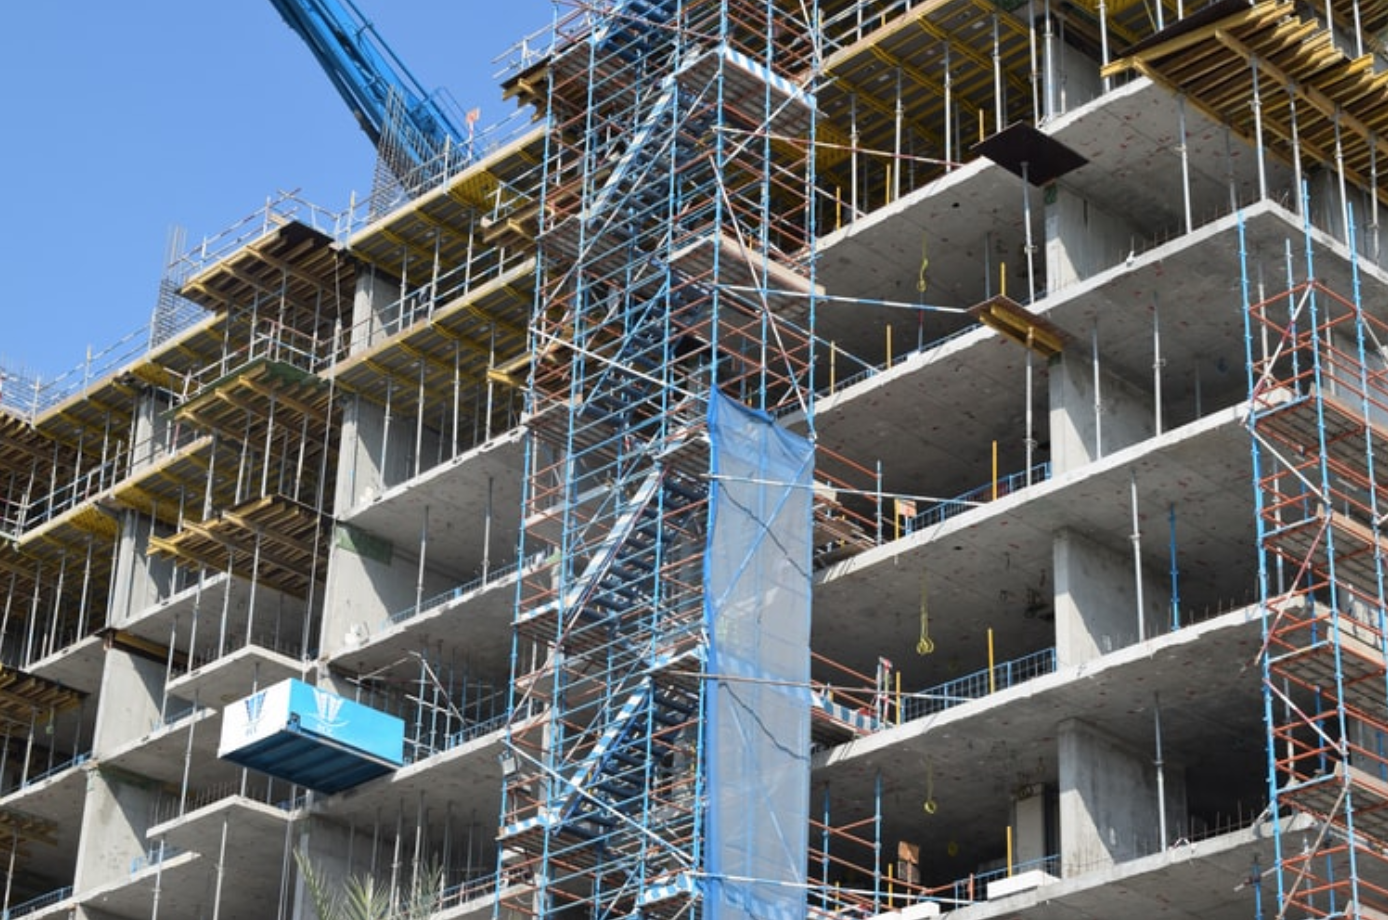 Top 5 Constructions Companies in Jamaica